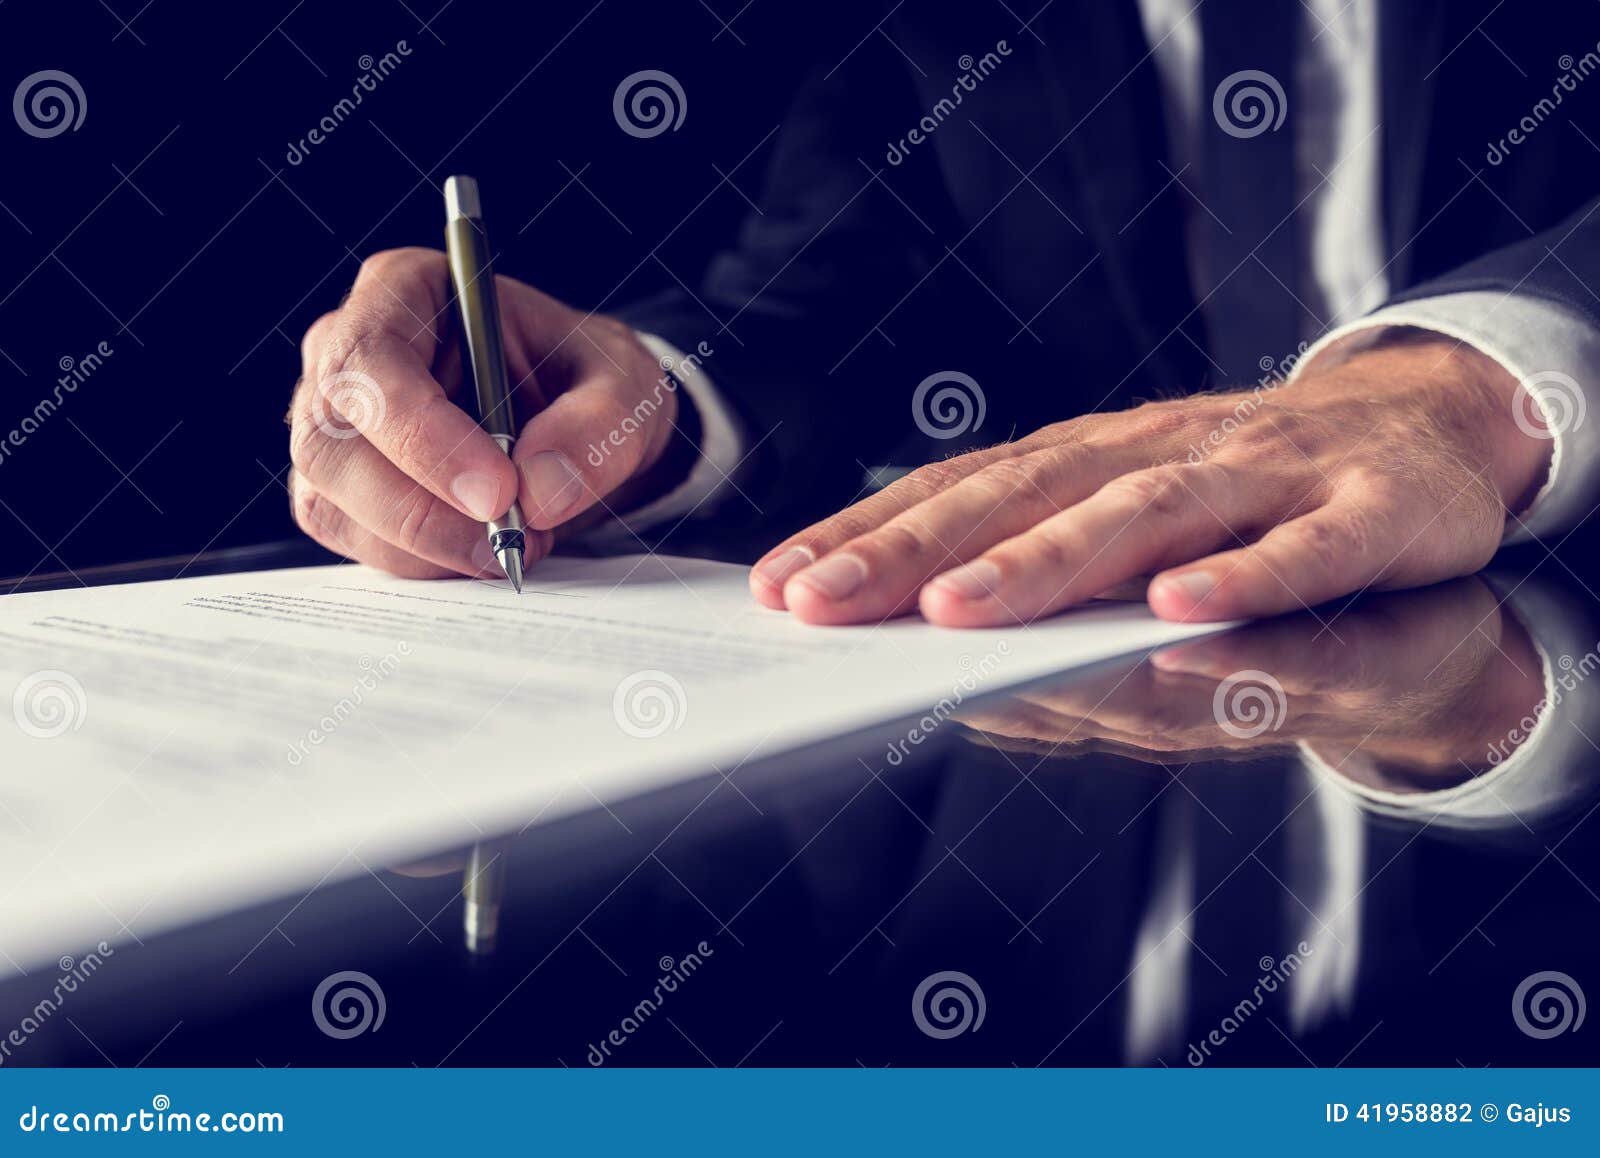 signing legal document